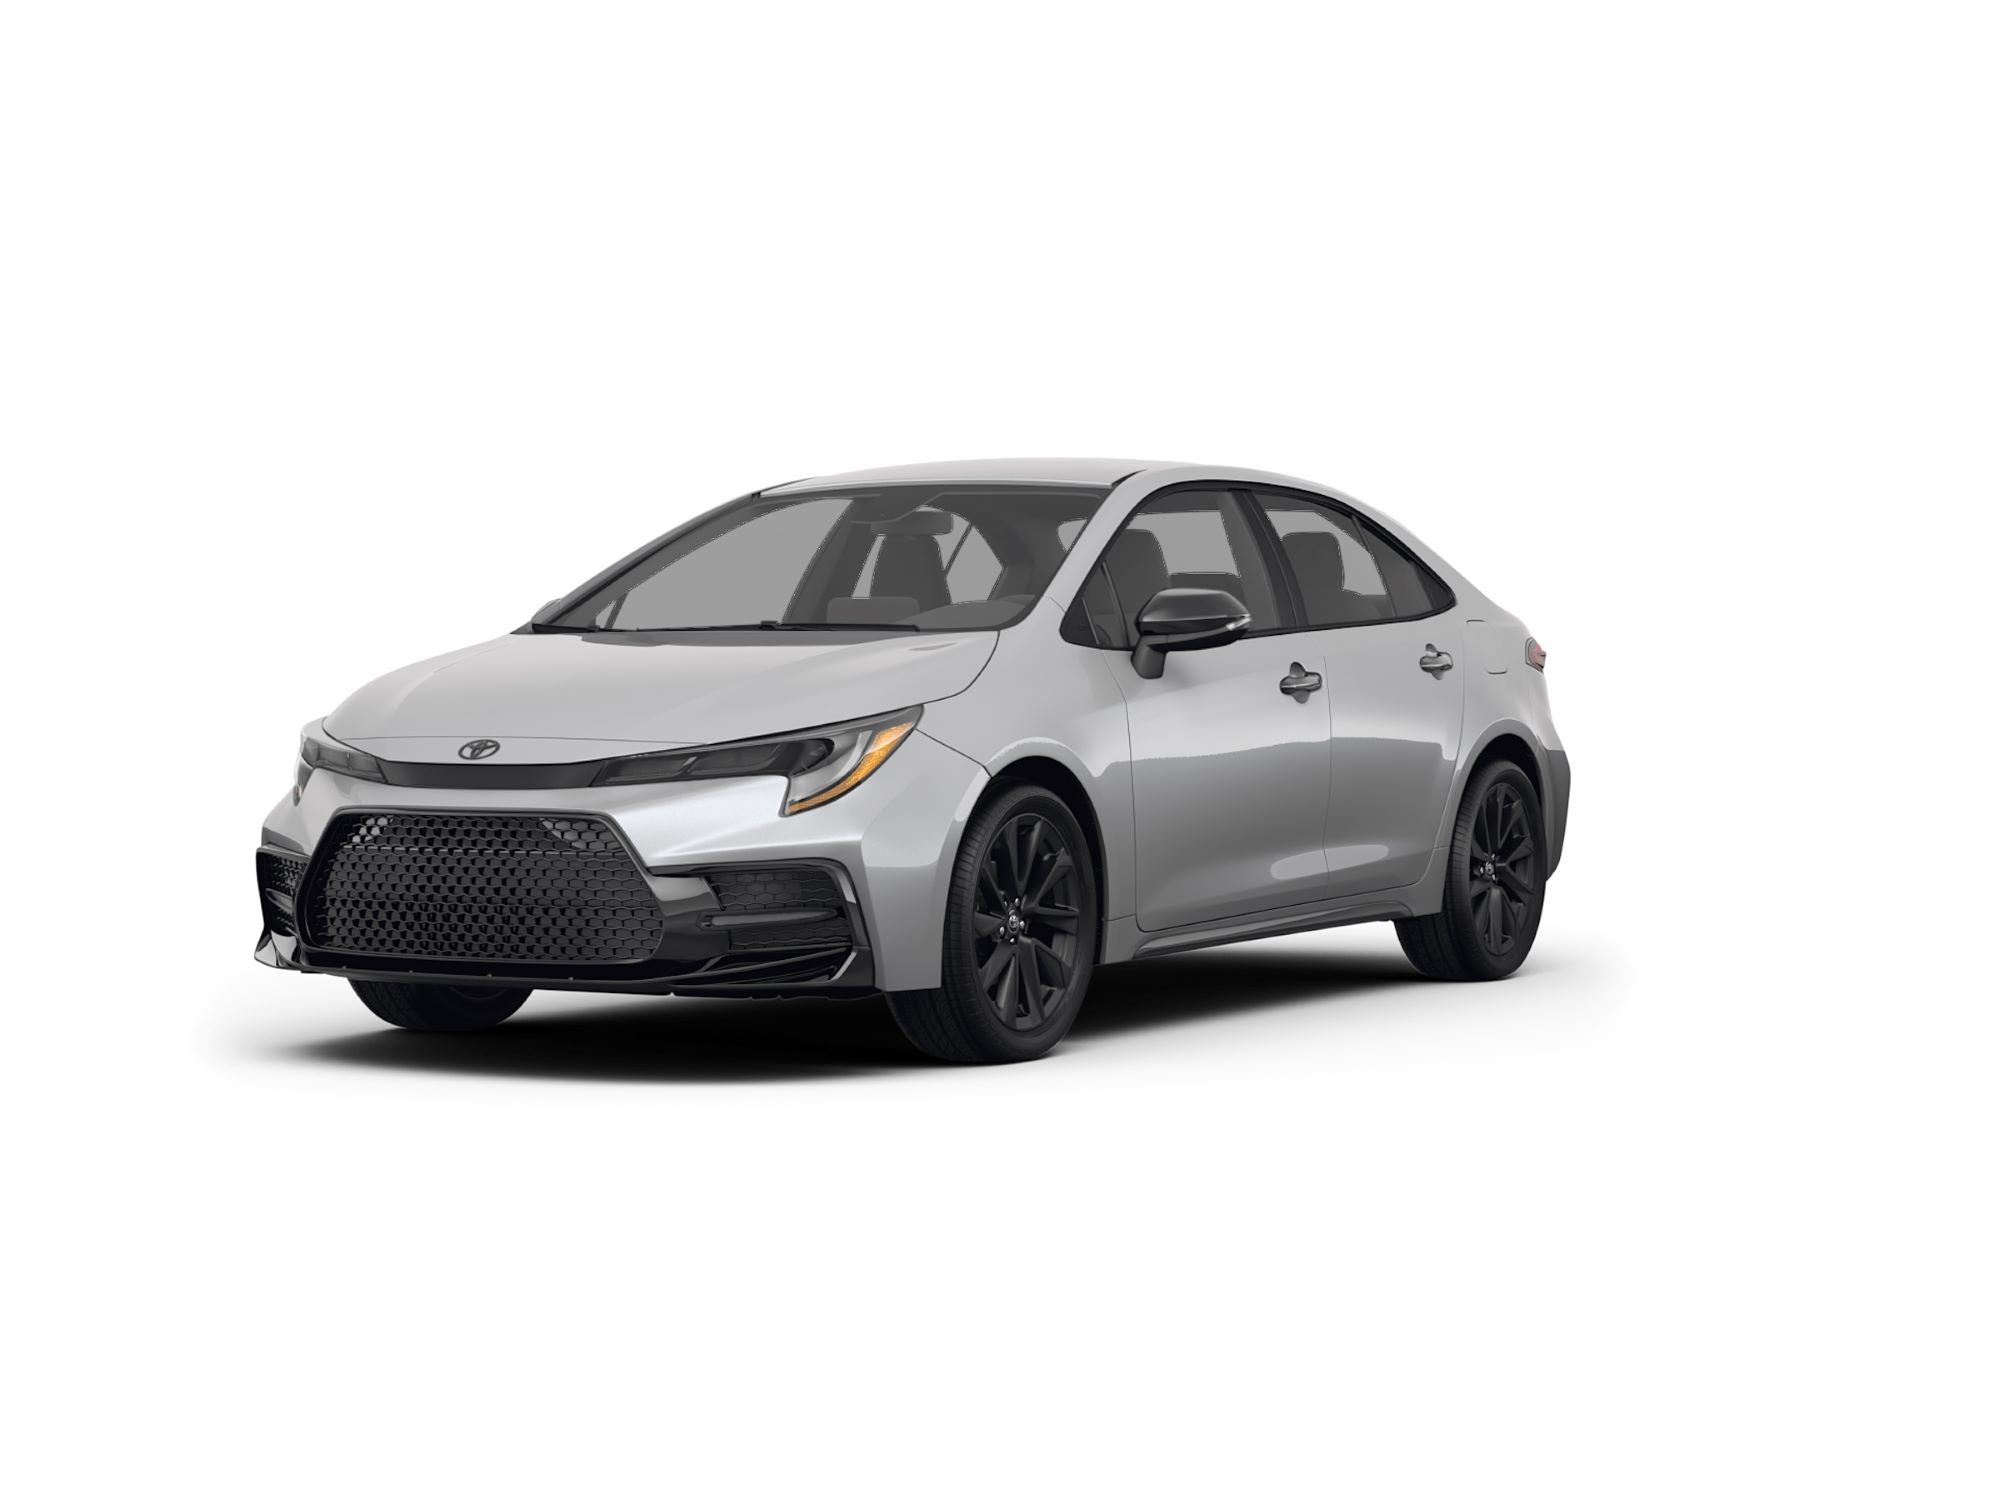 Toyota Corolla Sedan: Models, Generations and Details